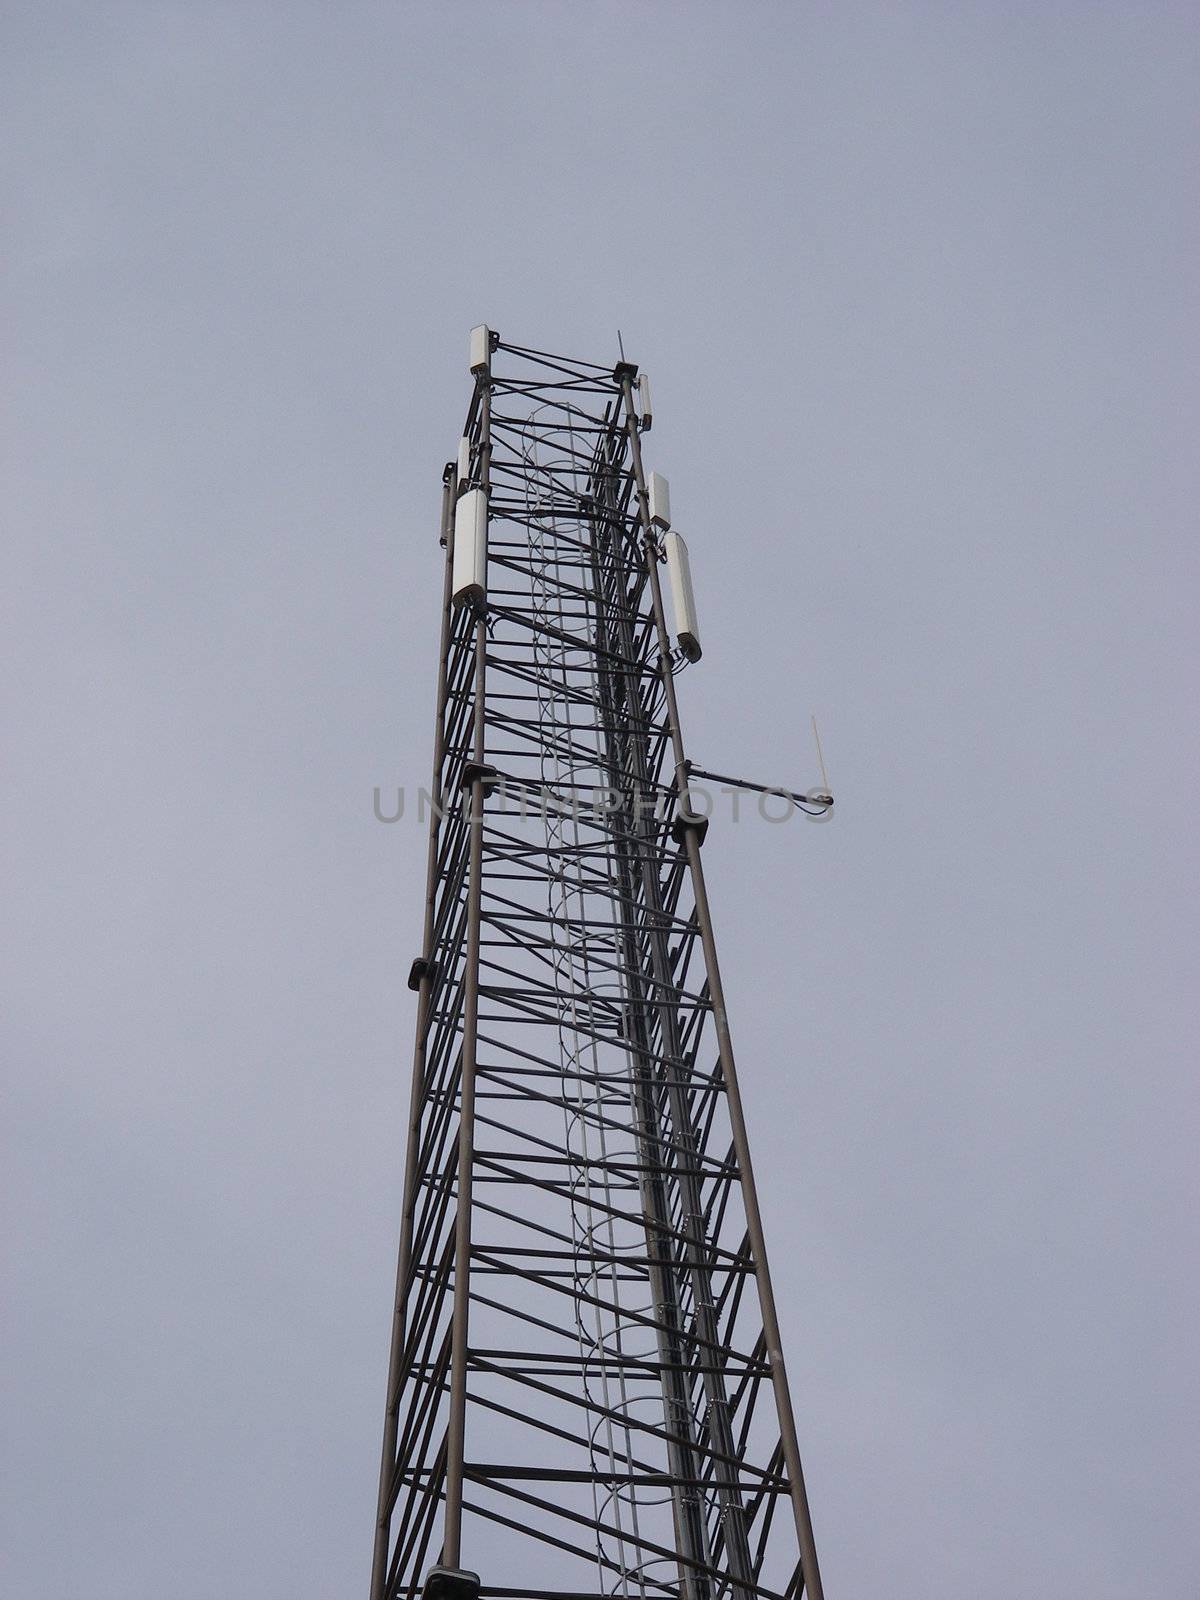 Communication Tower by berkan